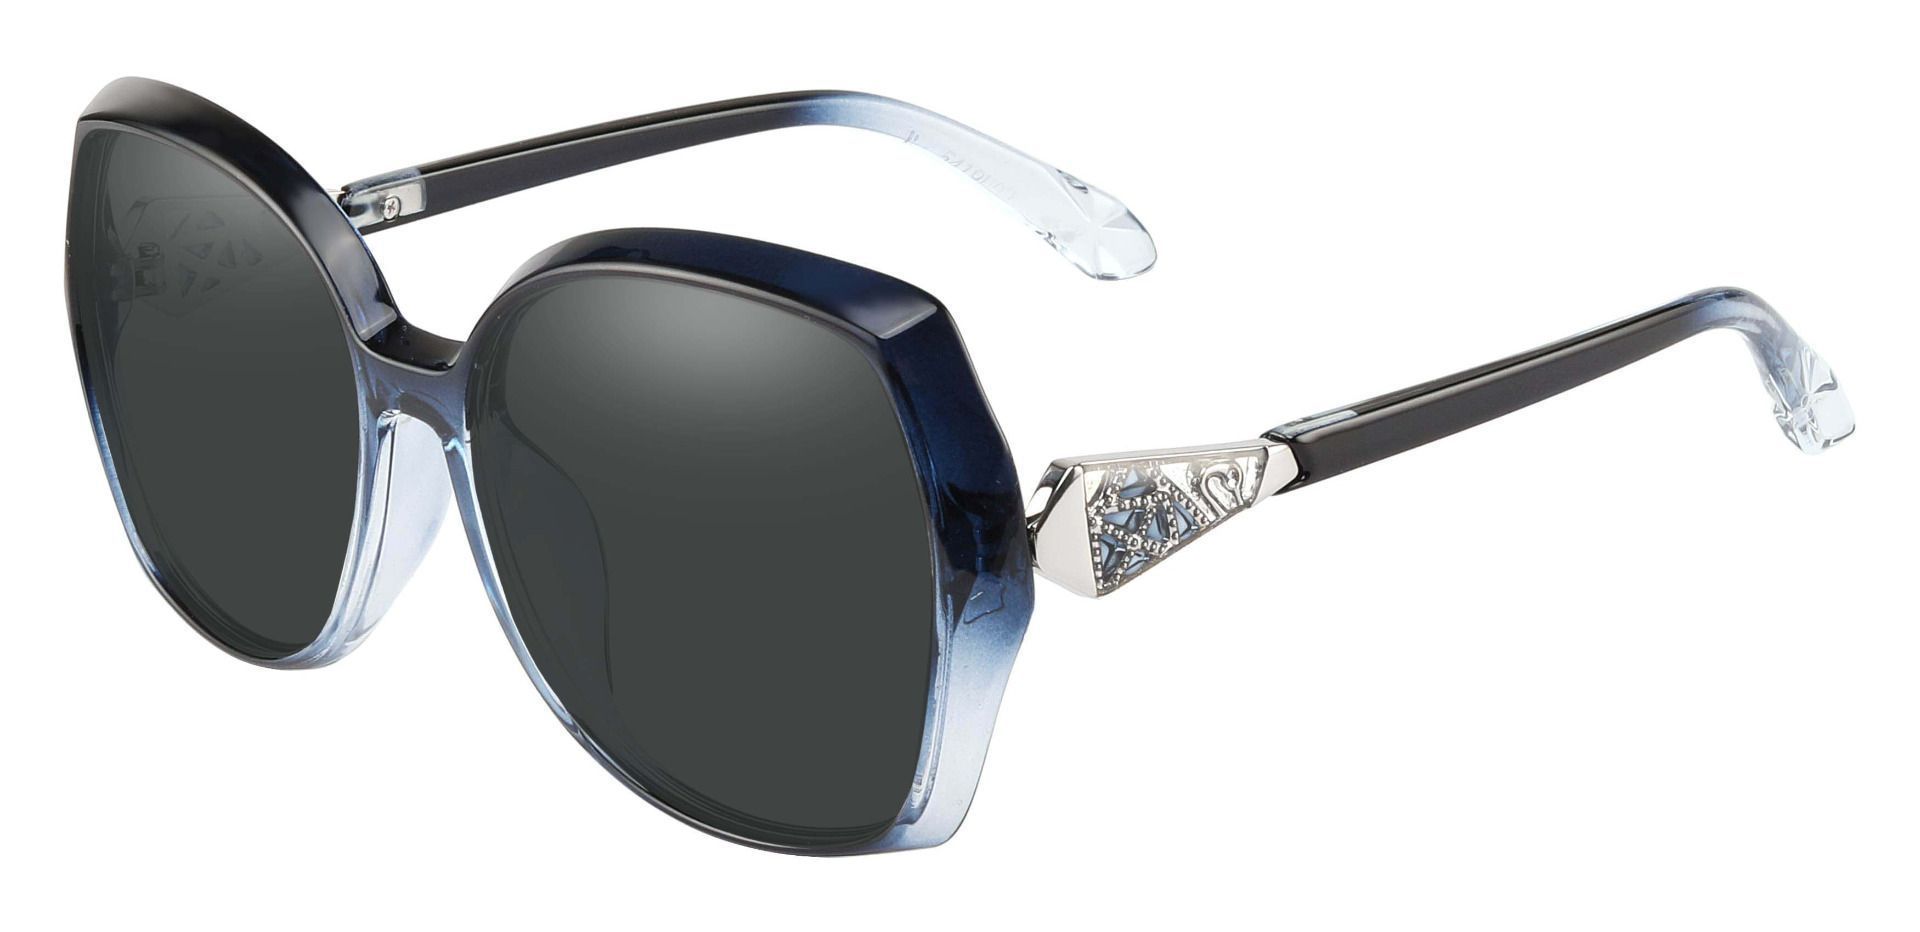 Swan Geometric Reading Sunglasses - Blue Frame With Gray Lenses